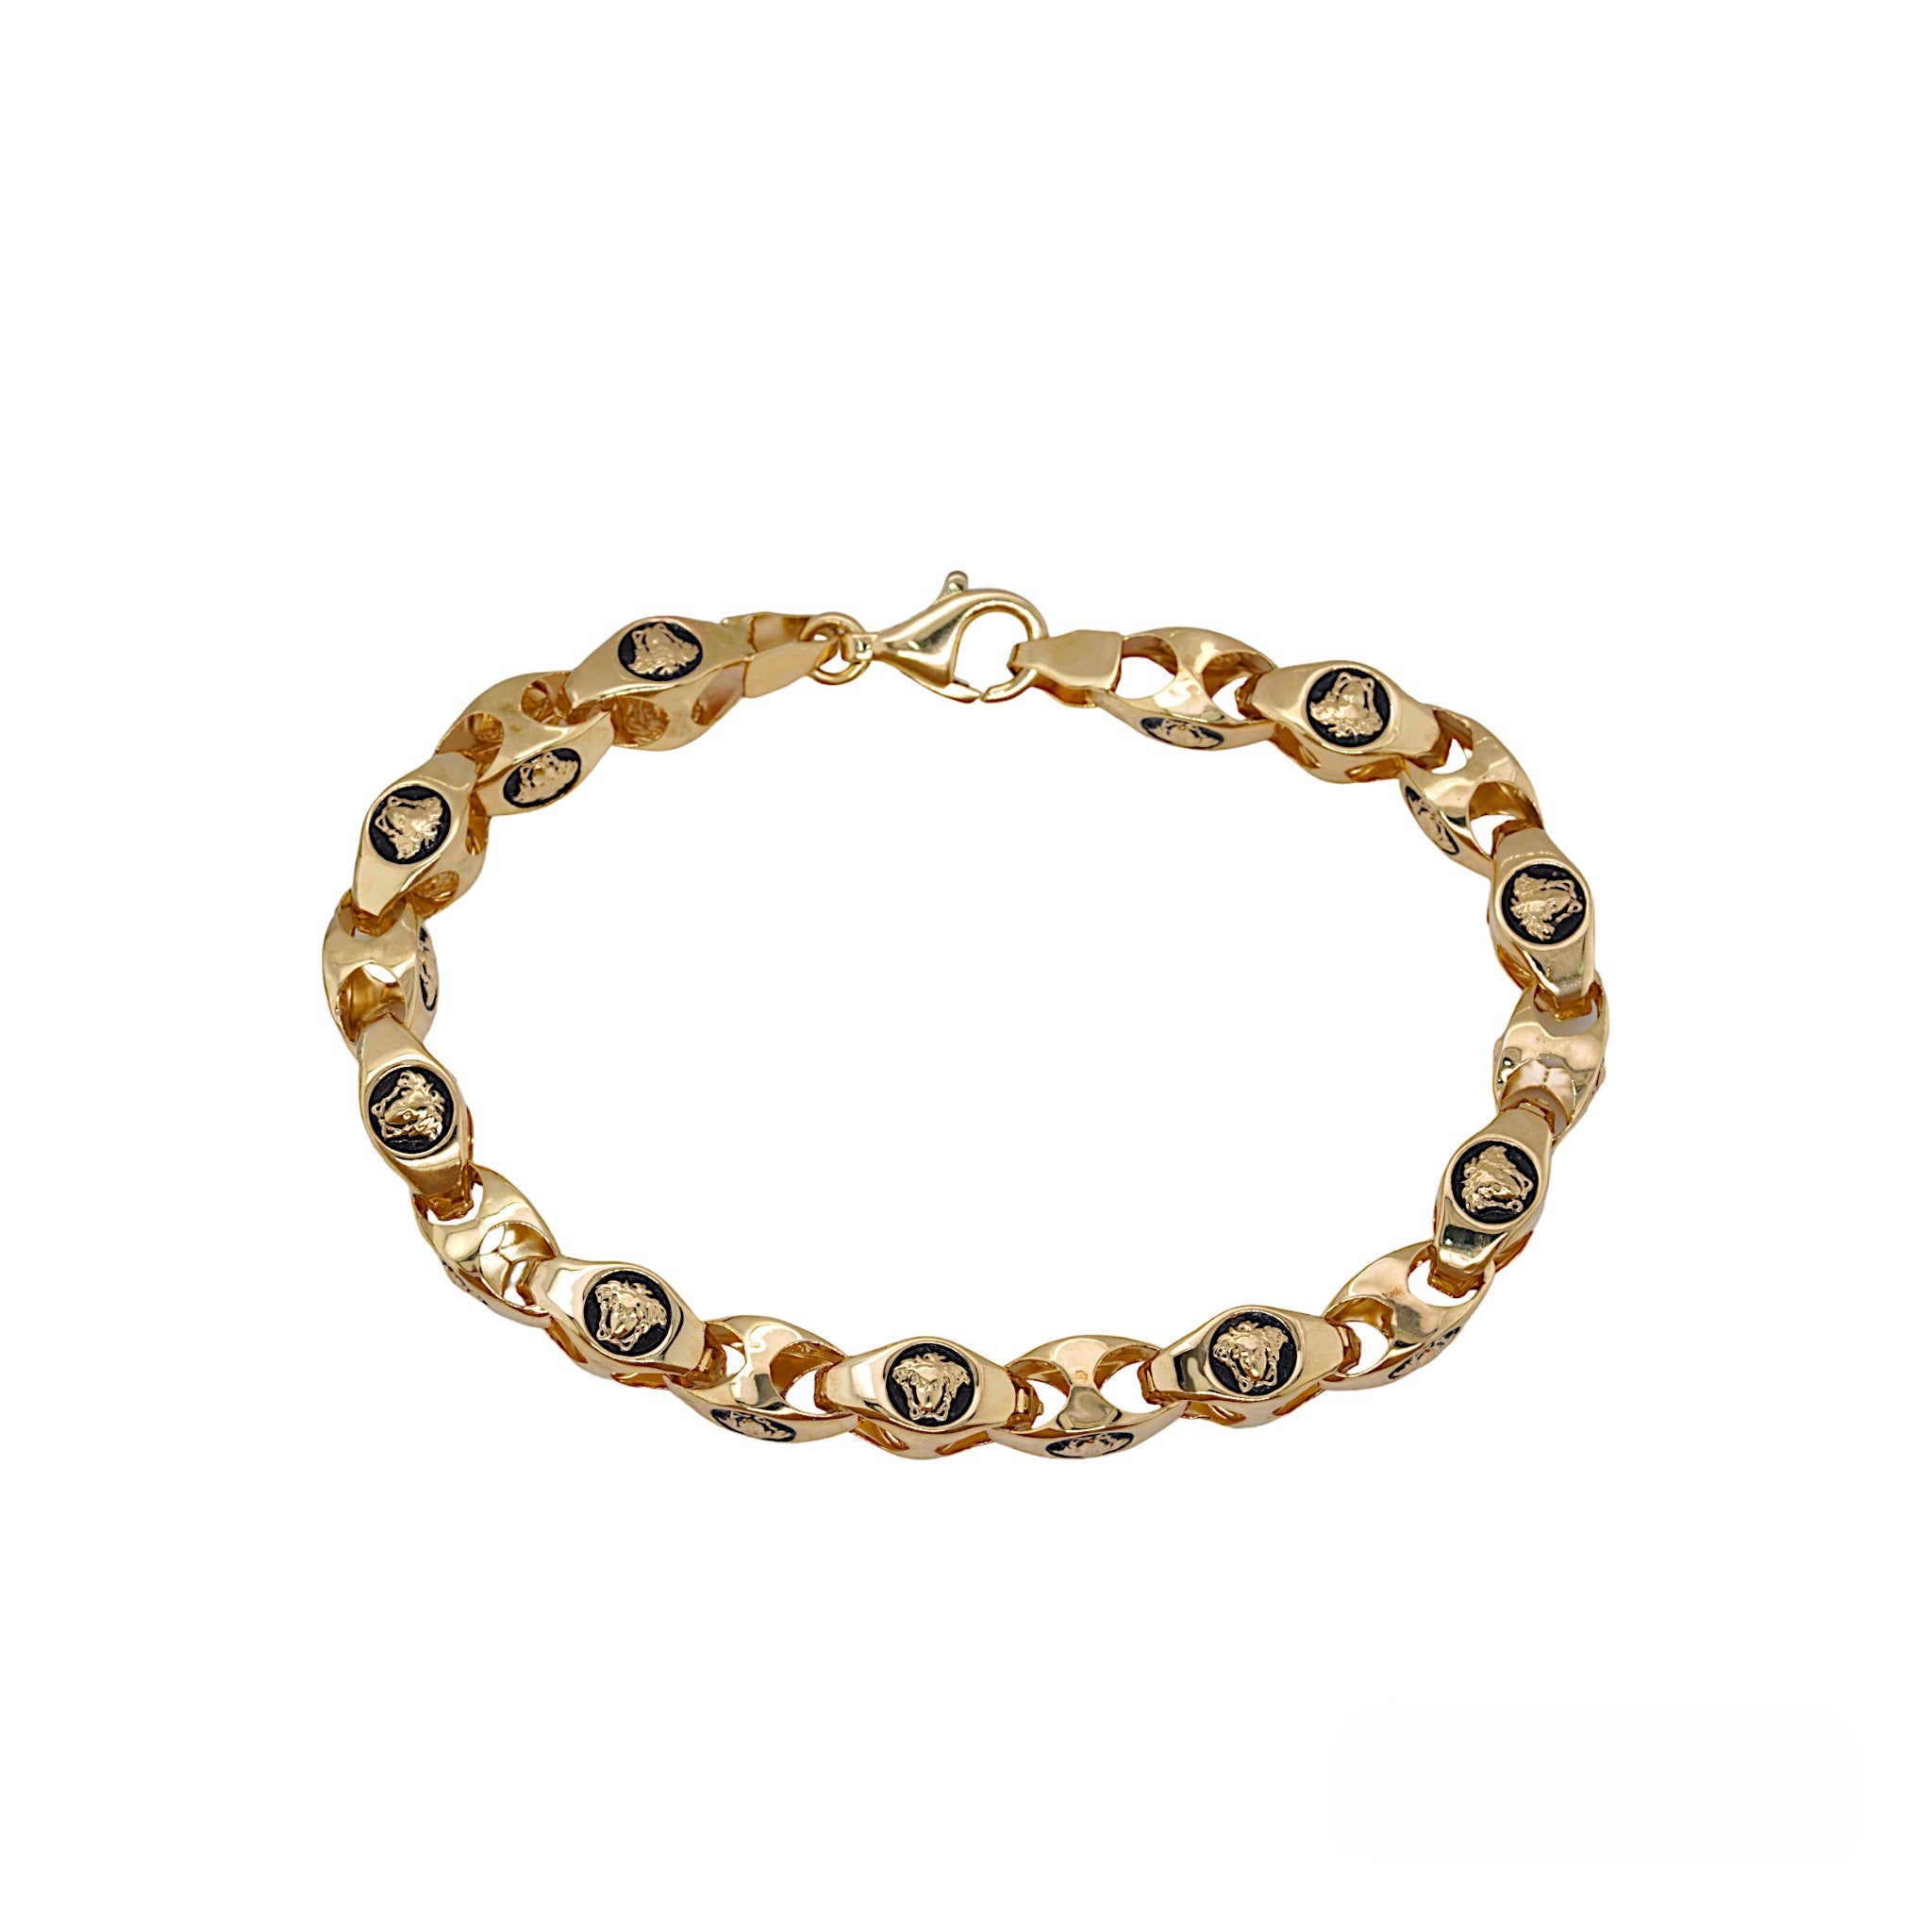 8″ 10K Yellow gold bracelet